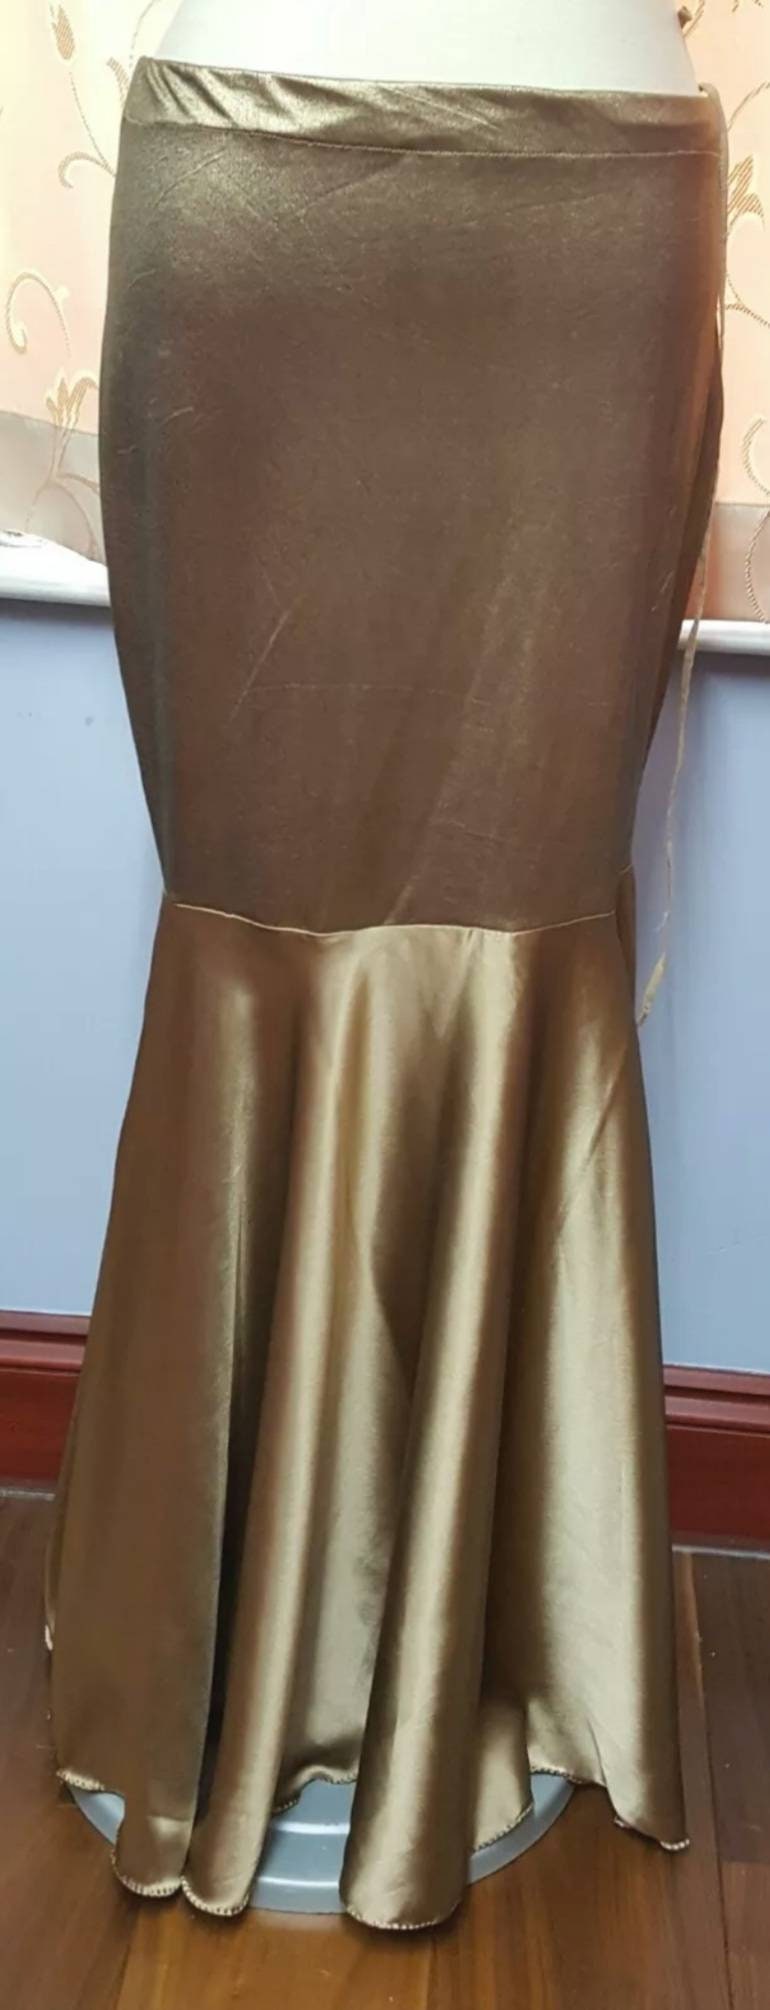 Designer Saree Petticoat SILHOUETTE Spandex Lycra Fitted Underskirt/ petticoat Nude/ Beige/ Gold Bridal Wedding Sari 